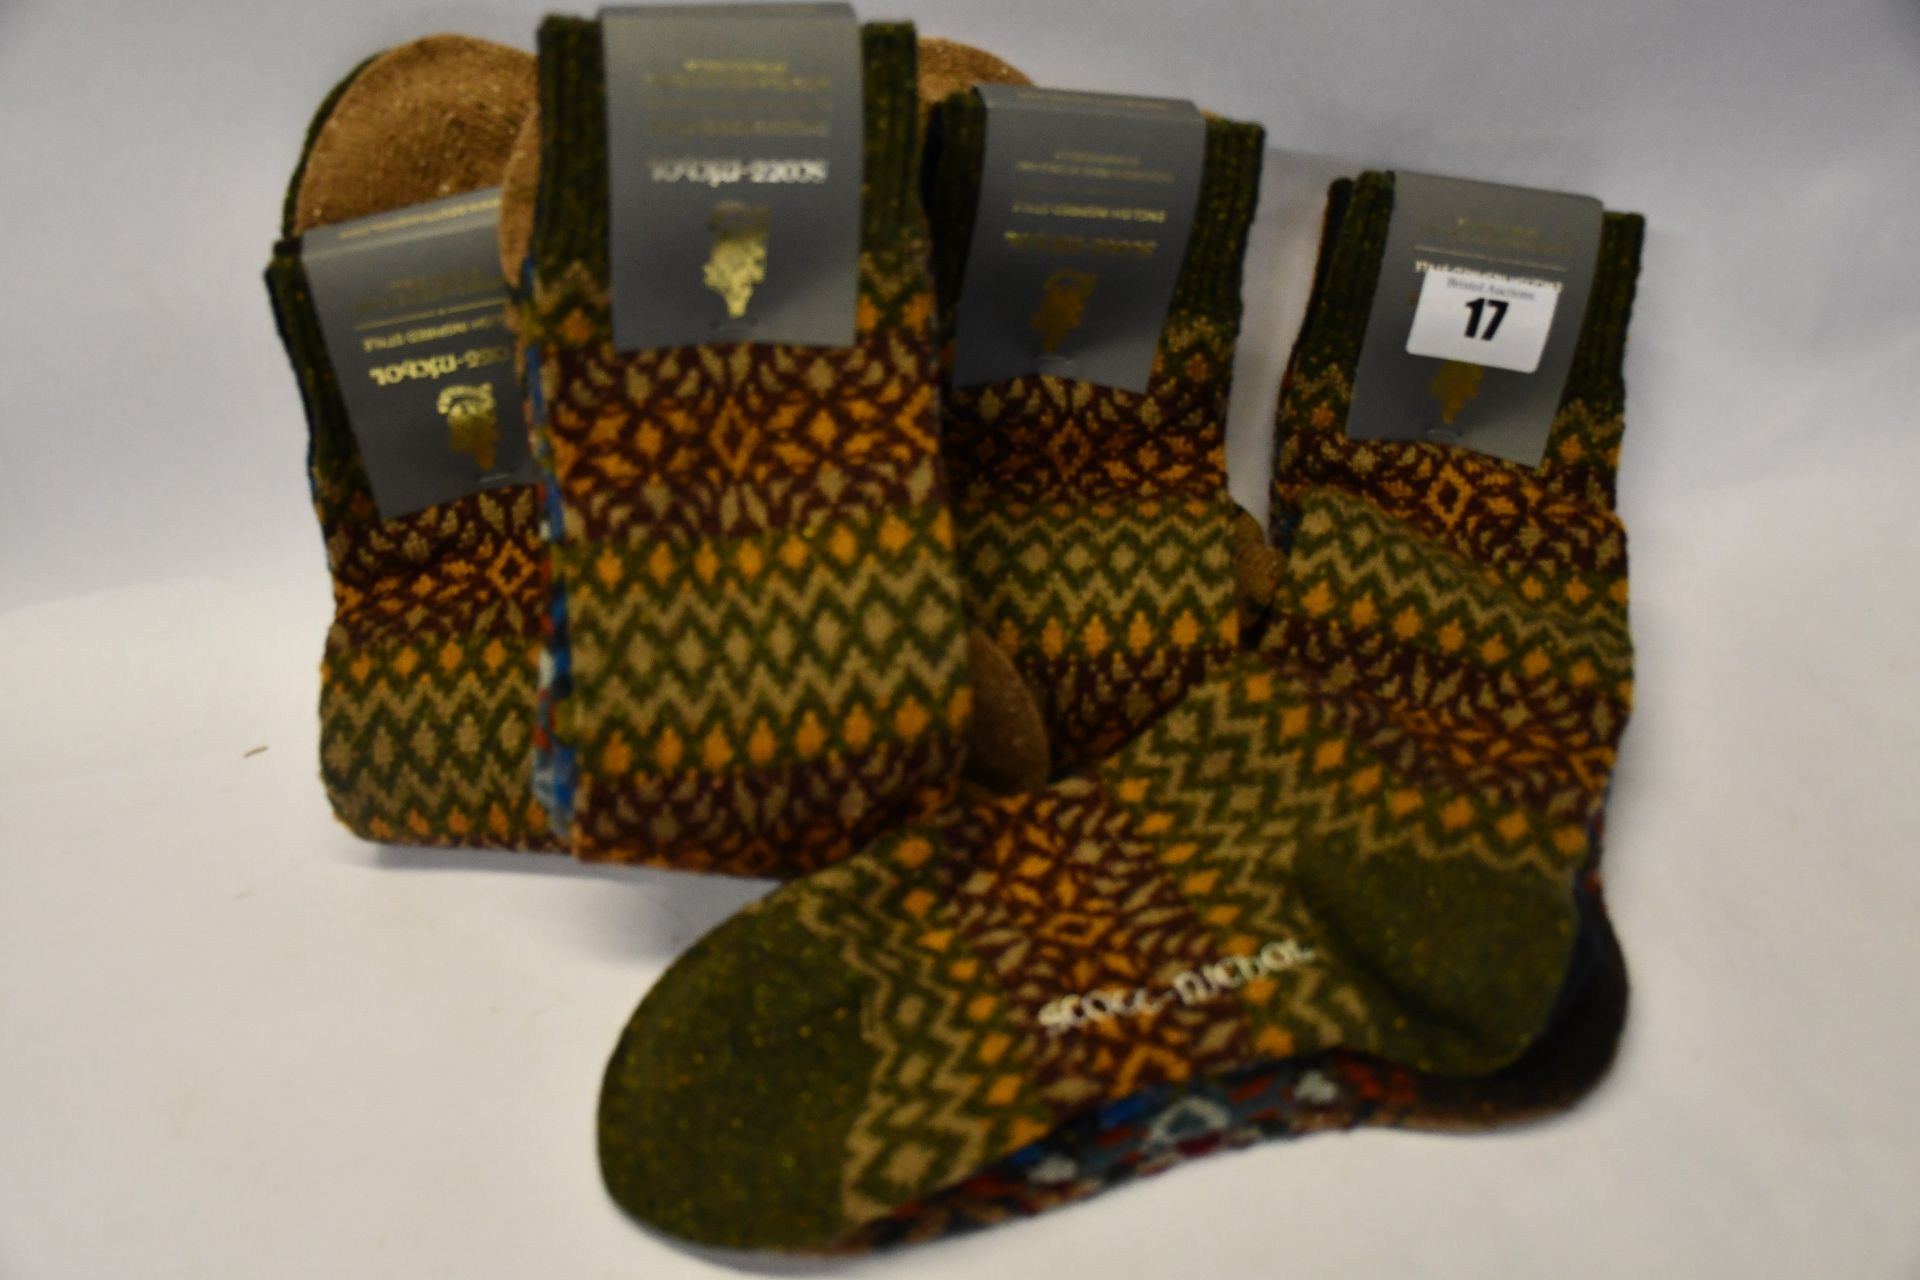 Eight pairs of as new Scott Nichol Fellcroft socks by Pantherella.